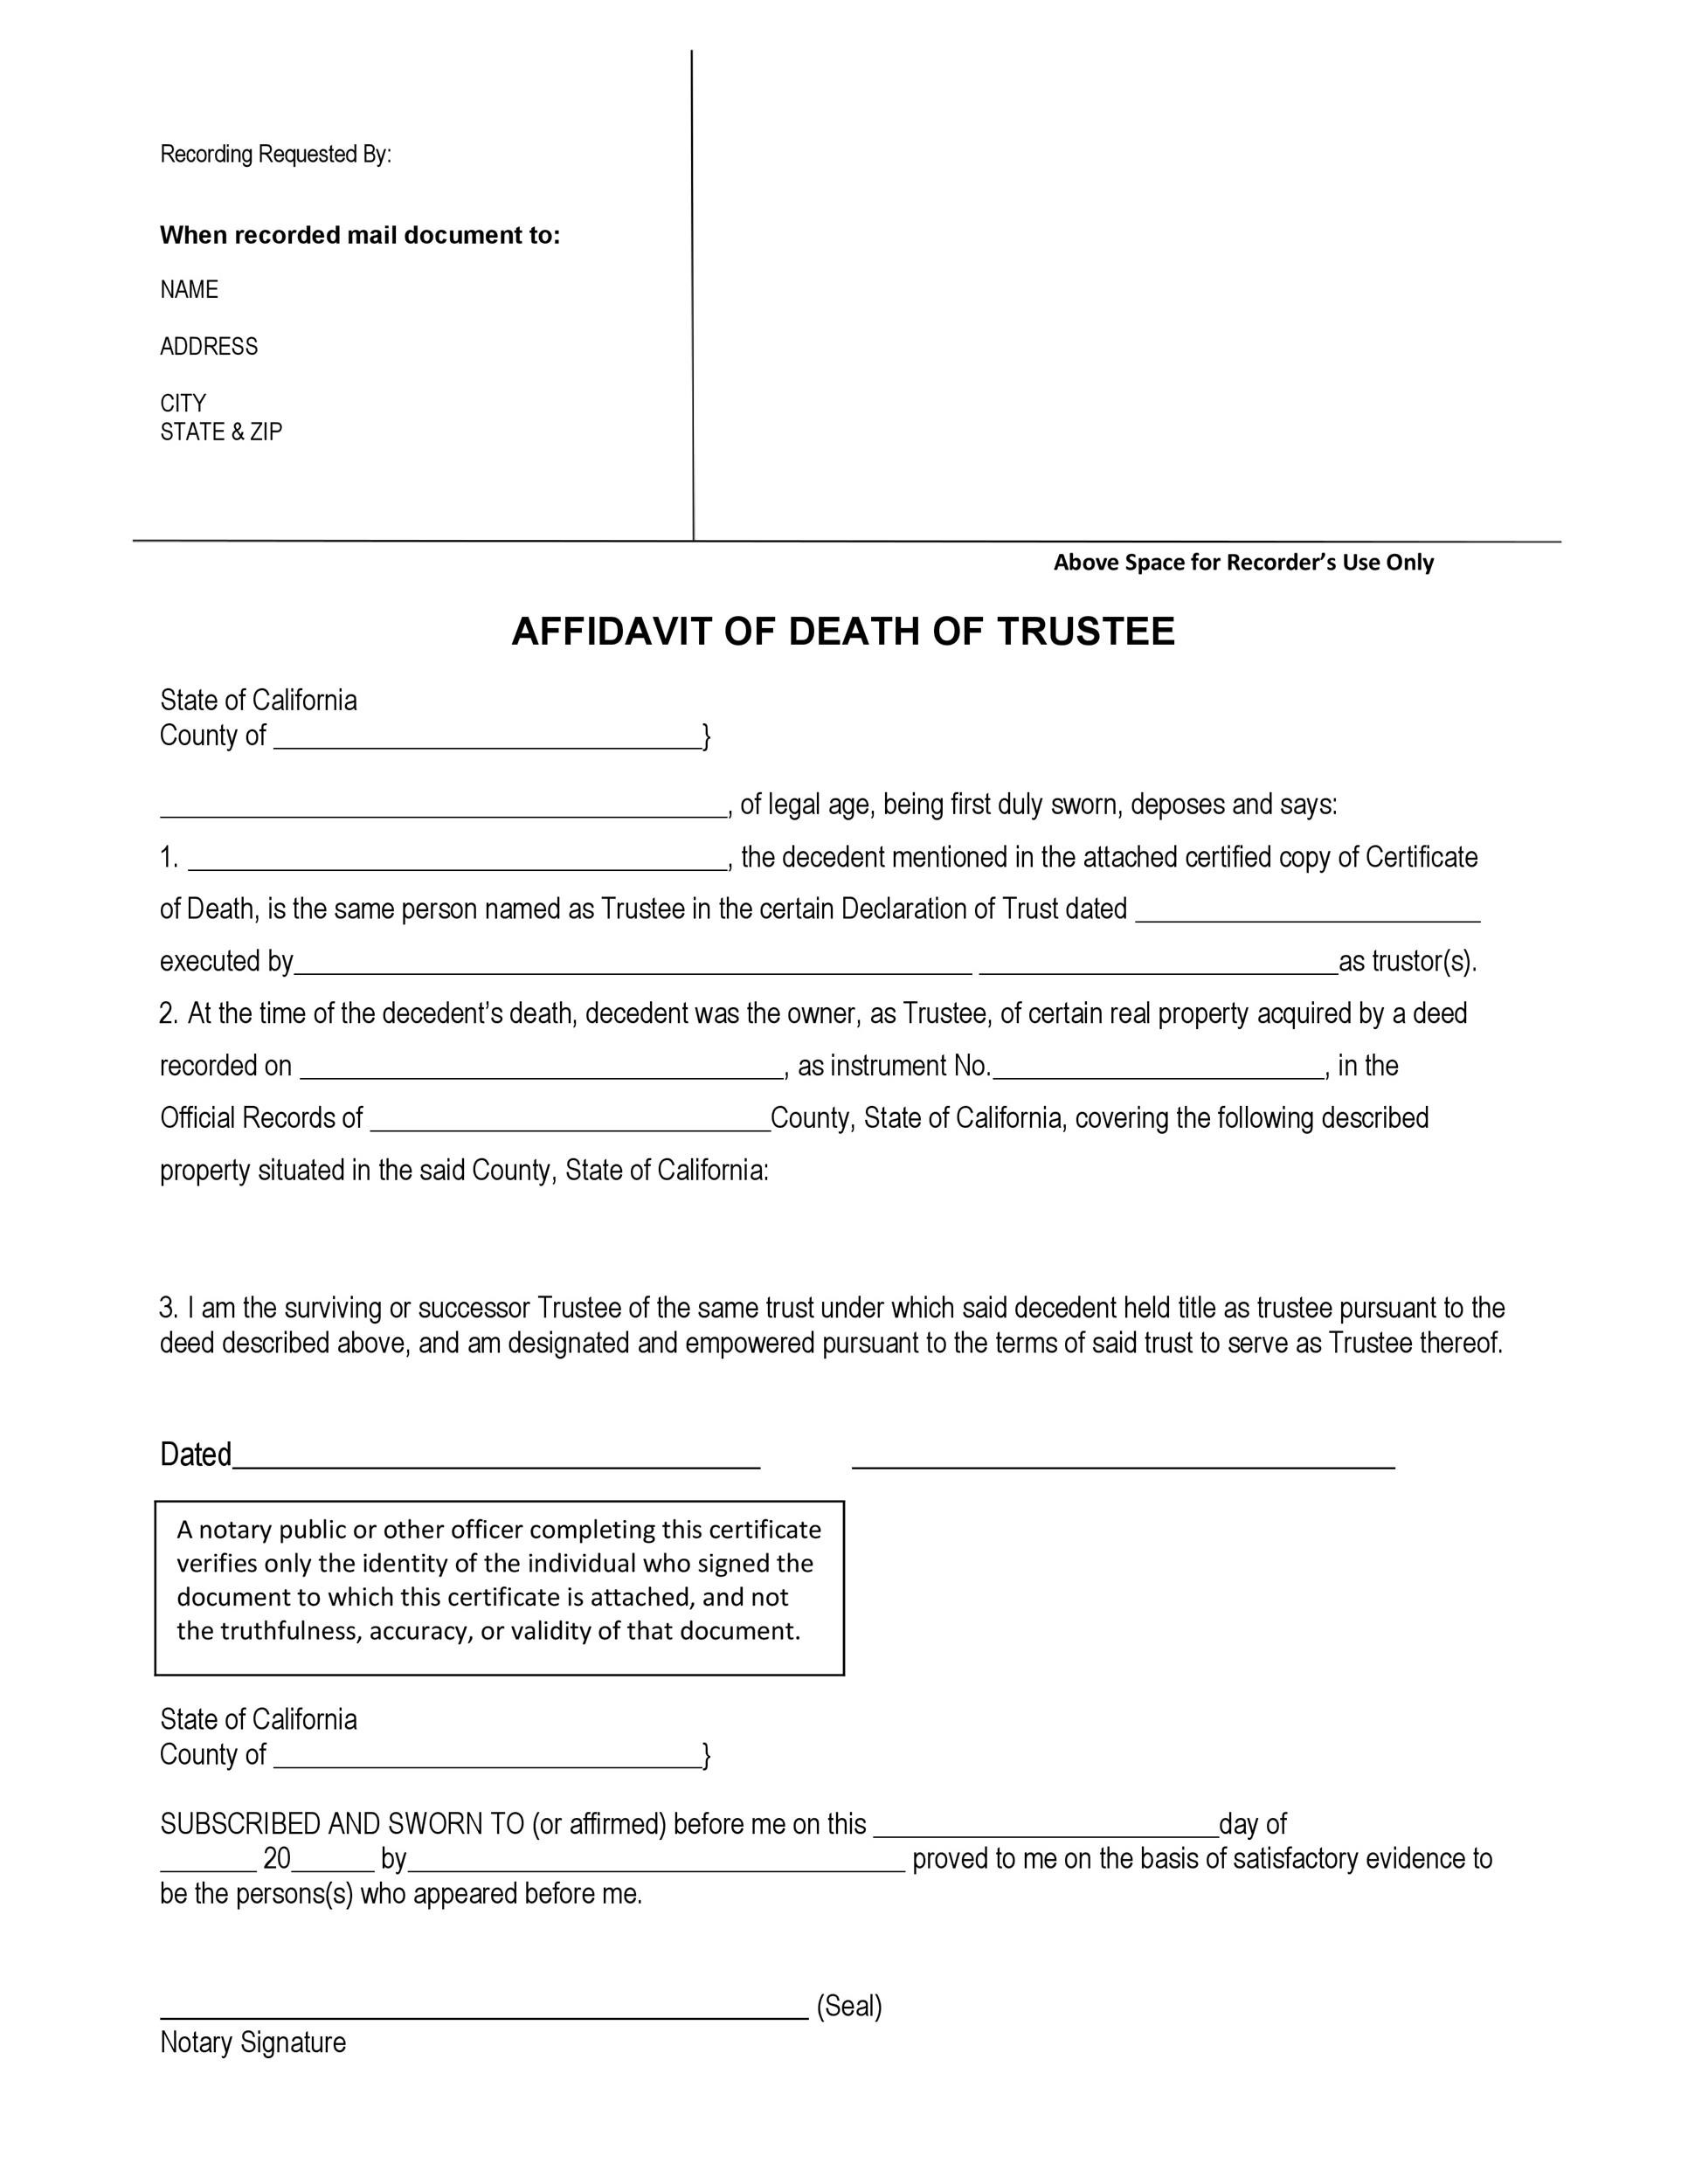 Affidavit Of Death 6 Examples Format Pdf Examples - Bank2home.com